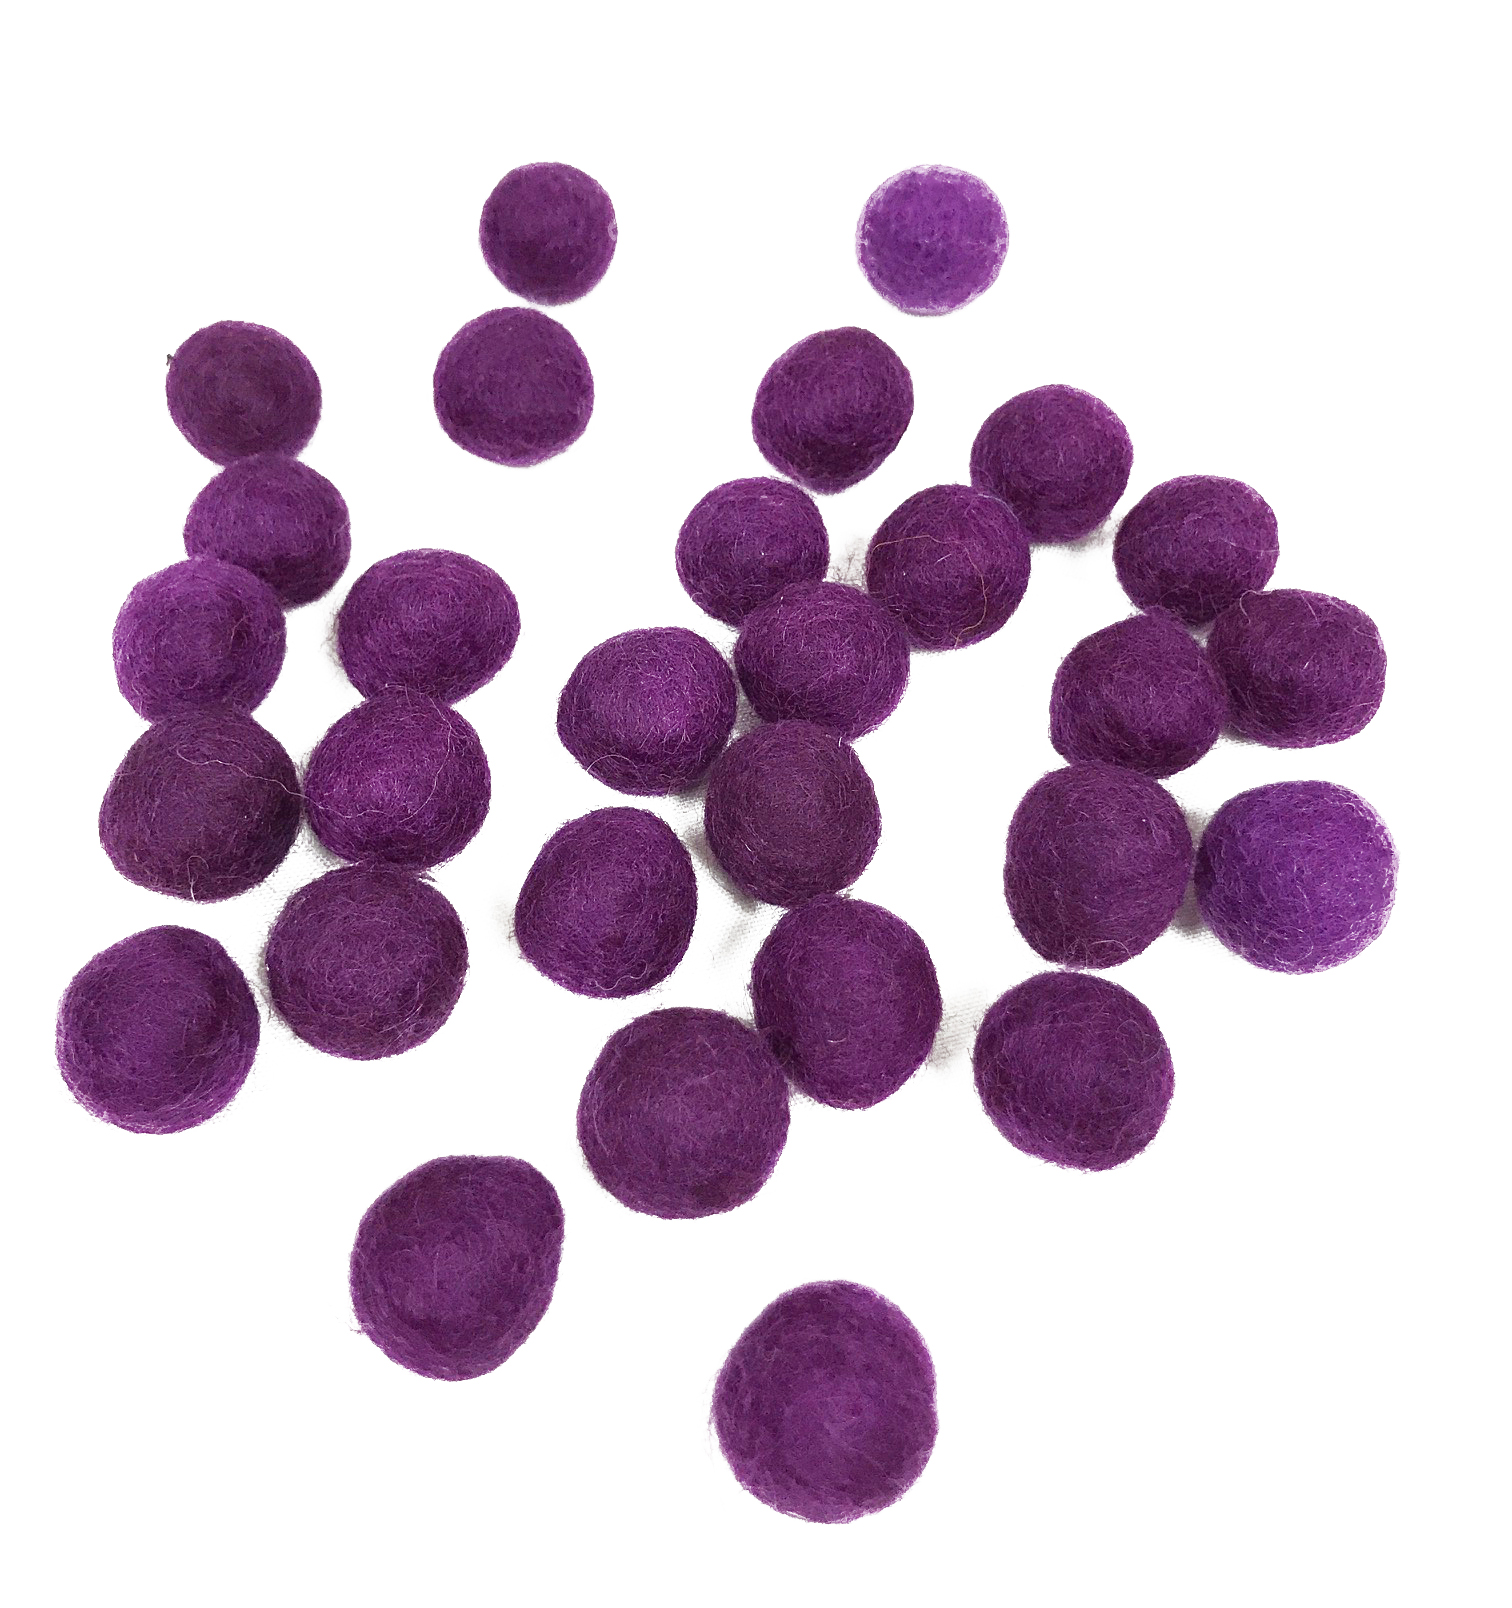 Yarn Place Felt Balls - 100 Pure Wool Beads 20mm Eggplant